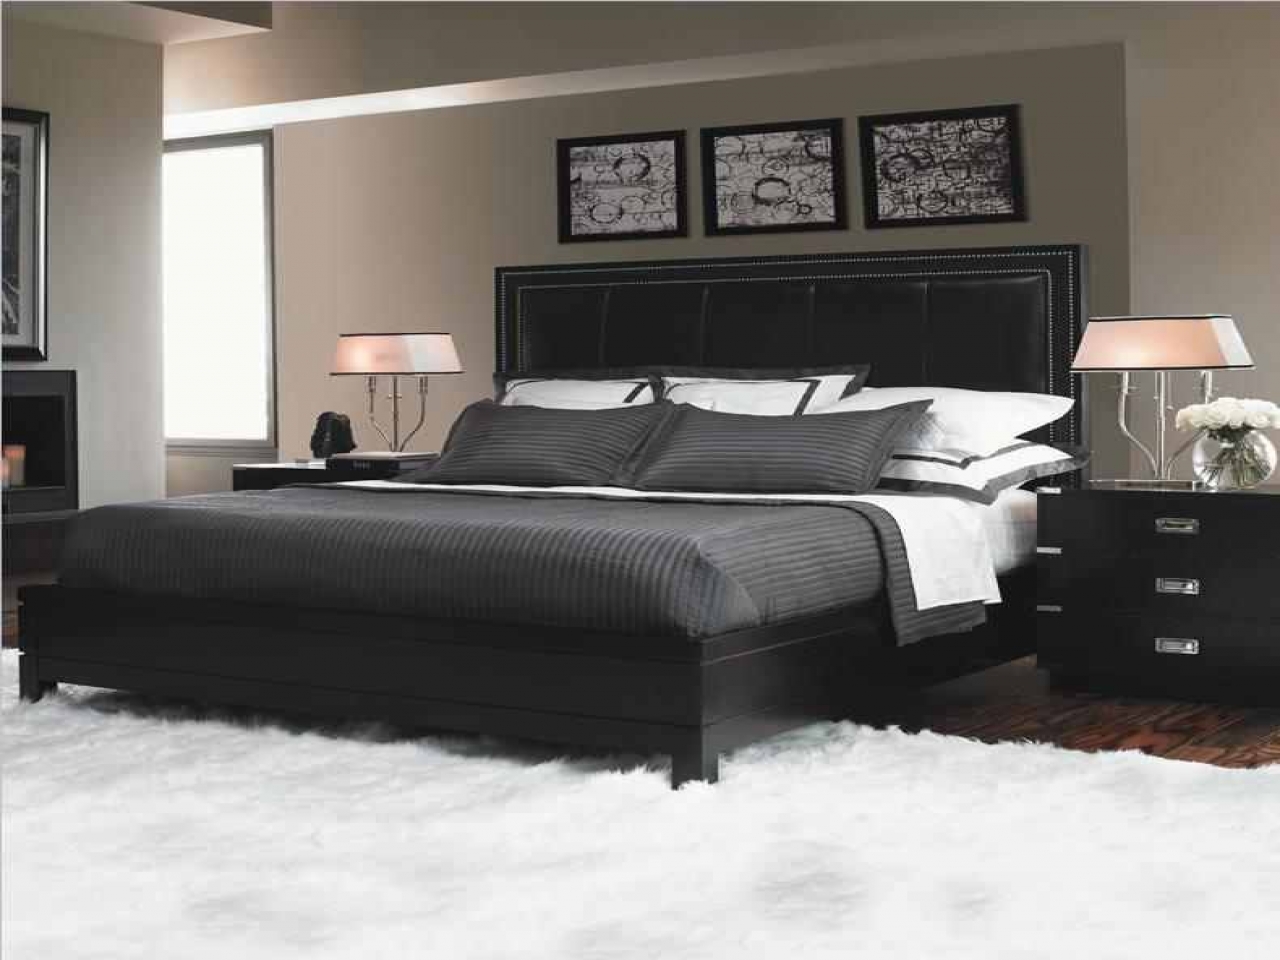 ikea bedroom furniture offers